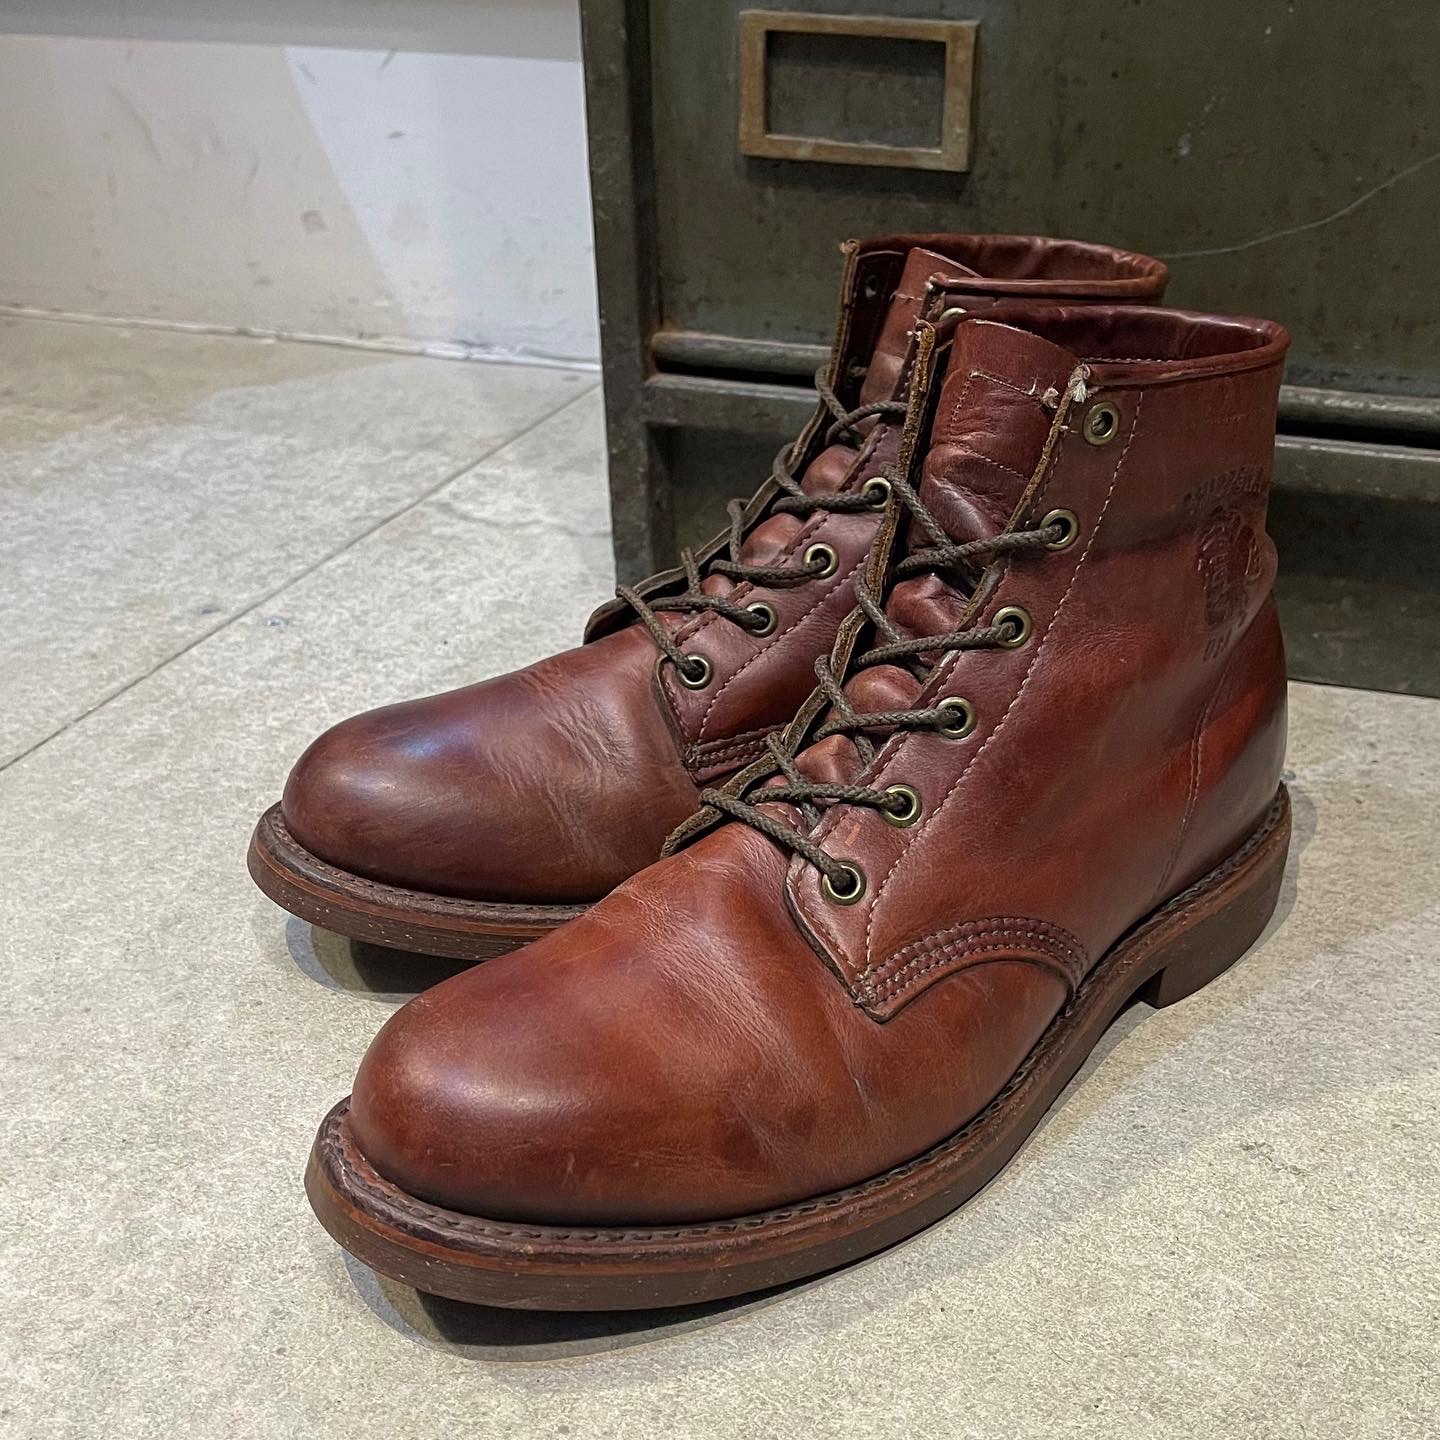 Chippewa Service Boots Size 8.5D